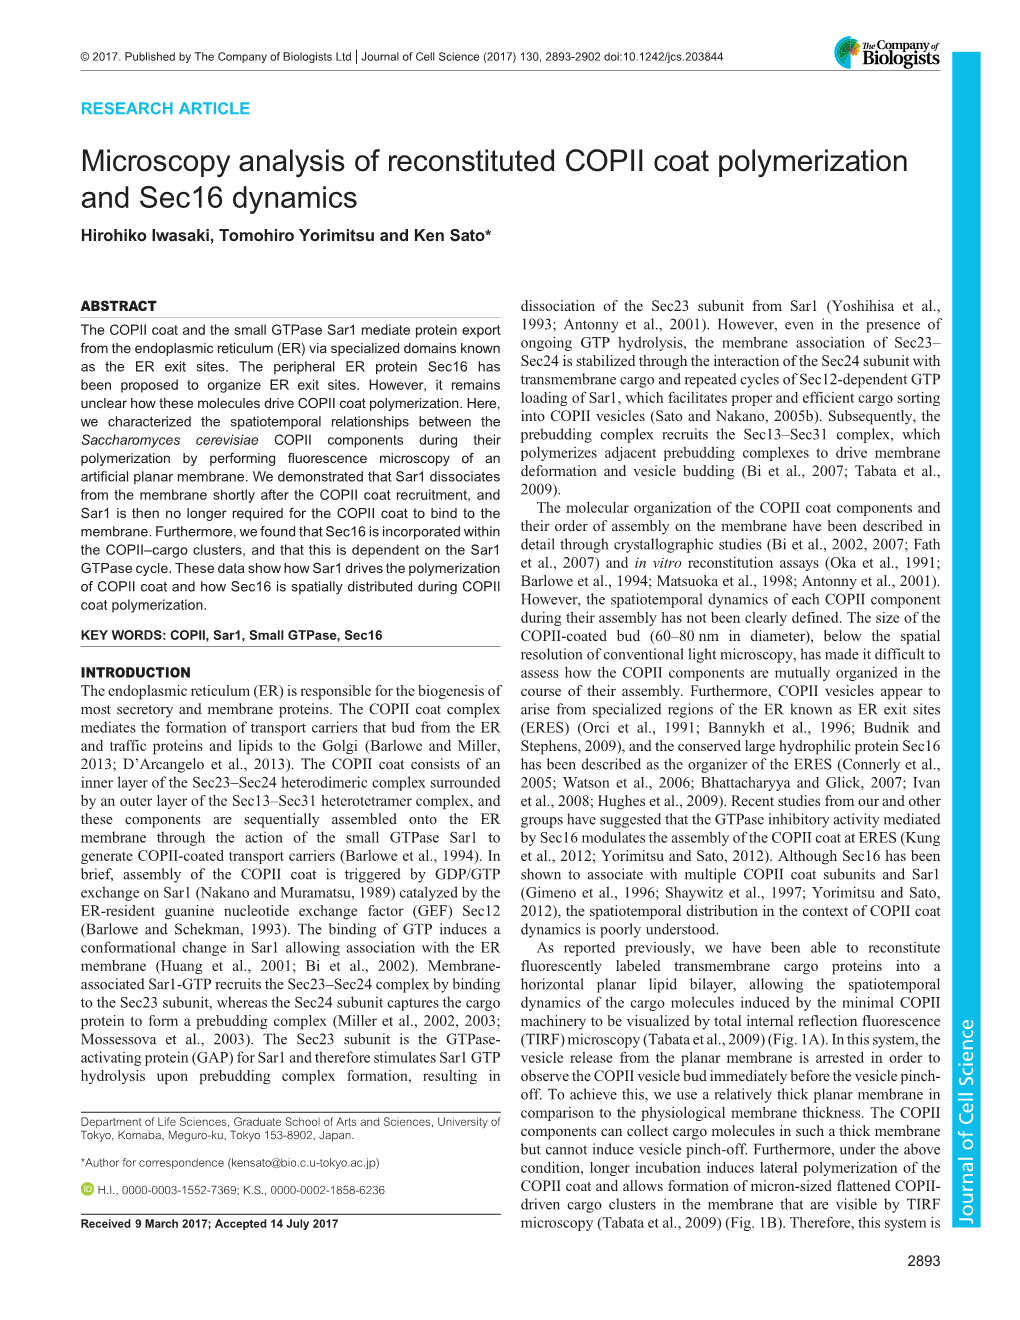 Microscopy Analysis of Reconstituted COPII Coat Polymerization and Sec16 Dynamics Hirohiko Iwasaki, Tomohiro Yorimitsu and Ken Sato*